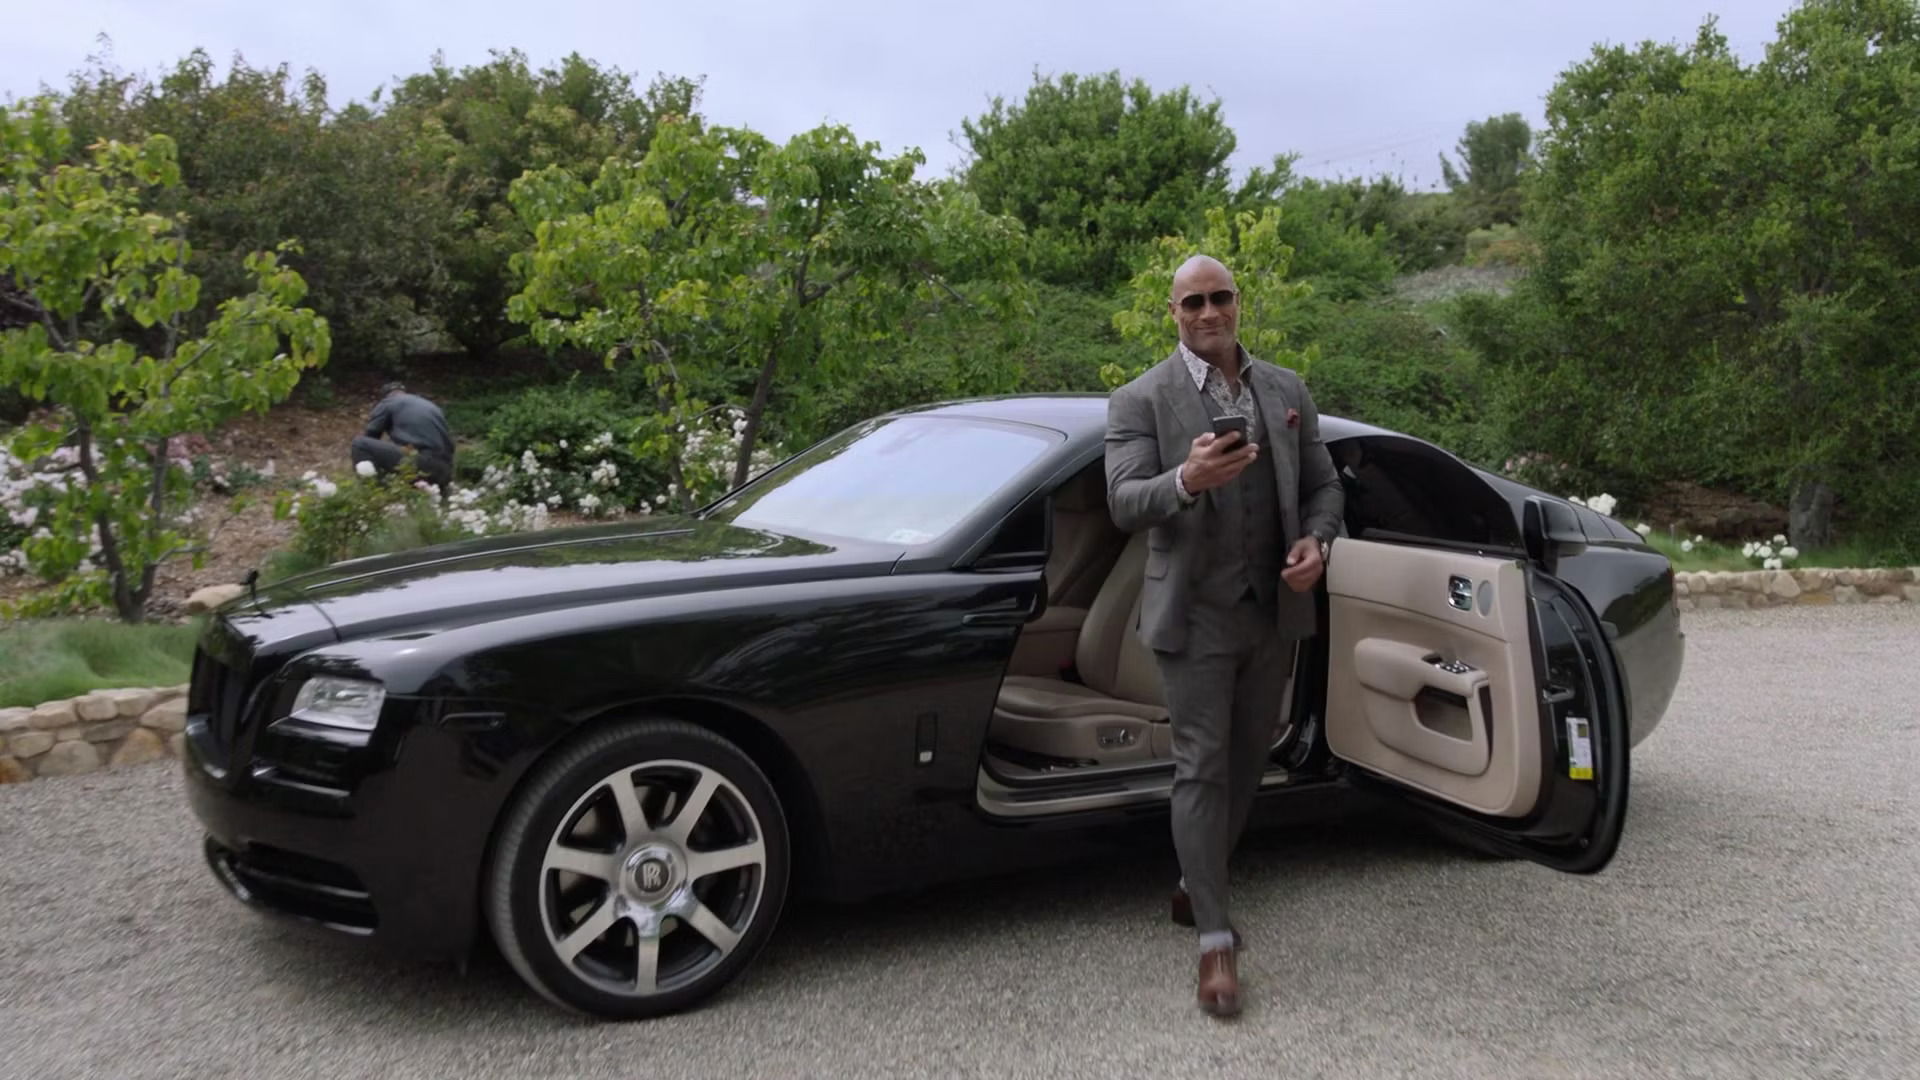 Dwayne "The Rock" Johnson's Rolls-Royce Wraith.